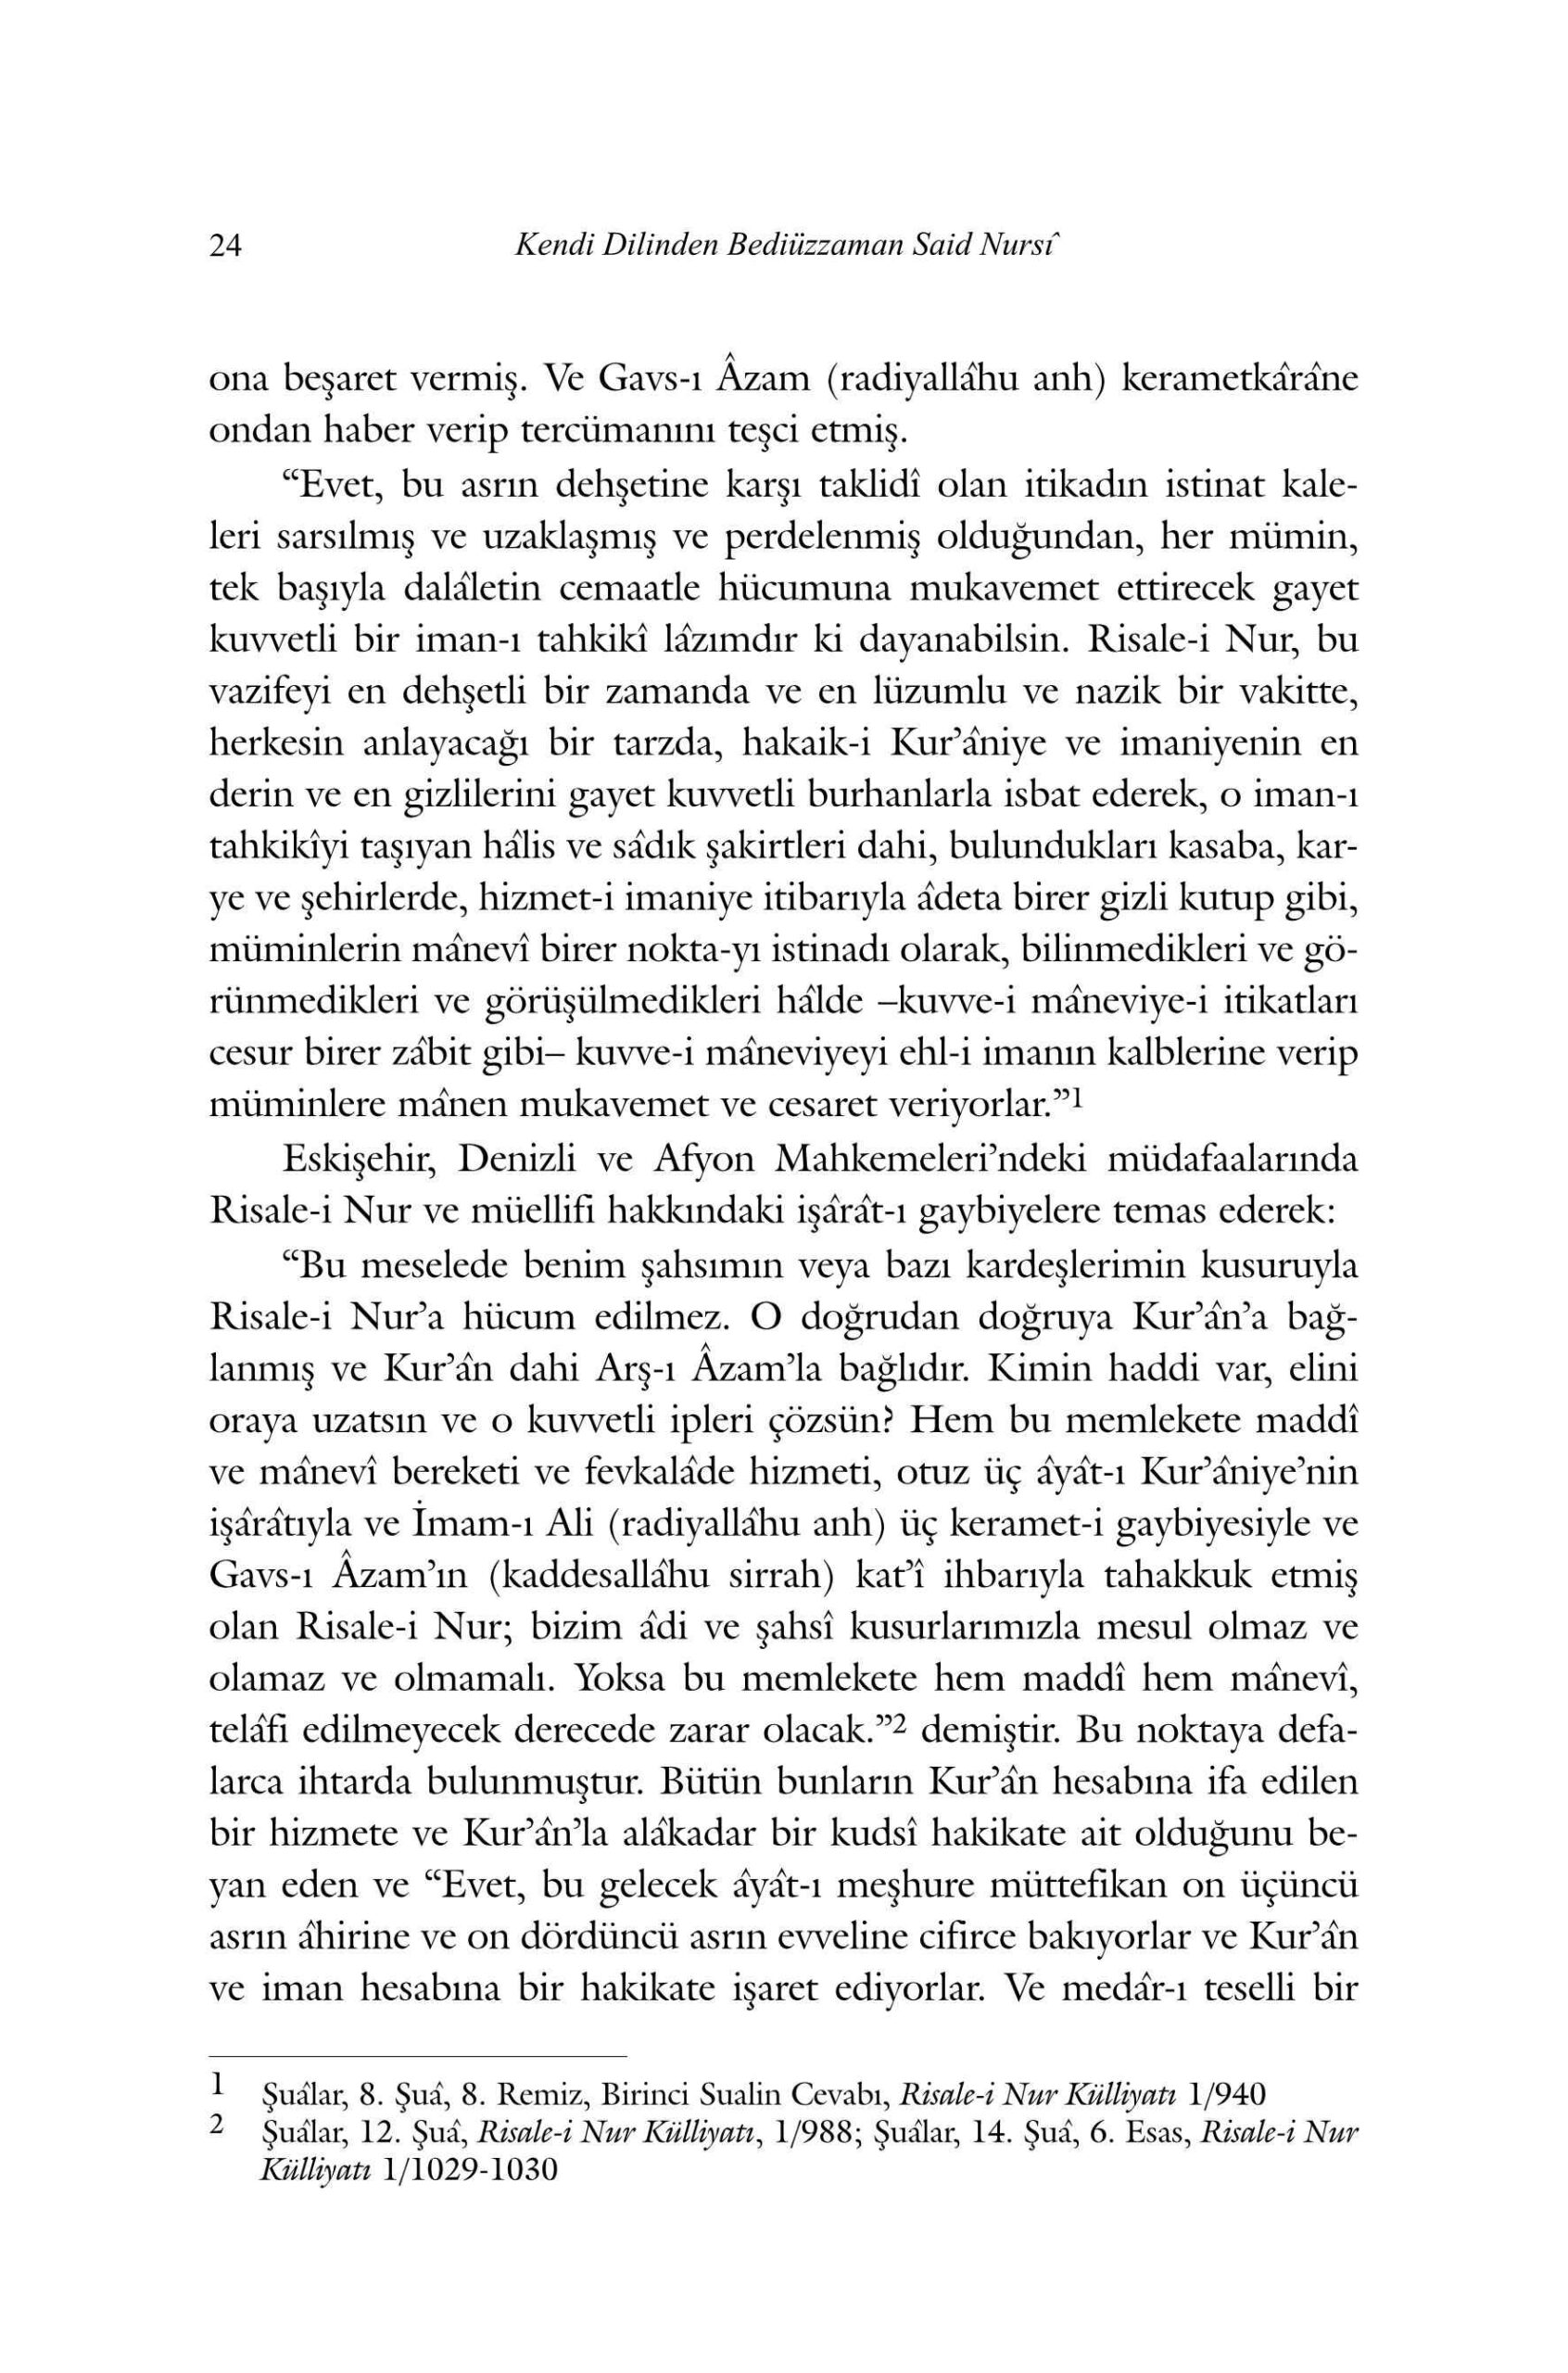 Ihsan Kasim Salihi - Kendi Dilinden Bediüzzaman Said Nursi - SahdamarY.pdf, 633-Sayfa 